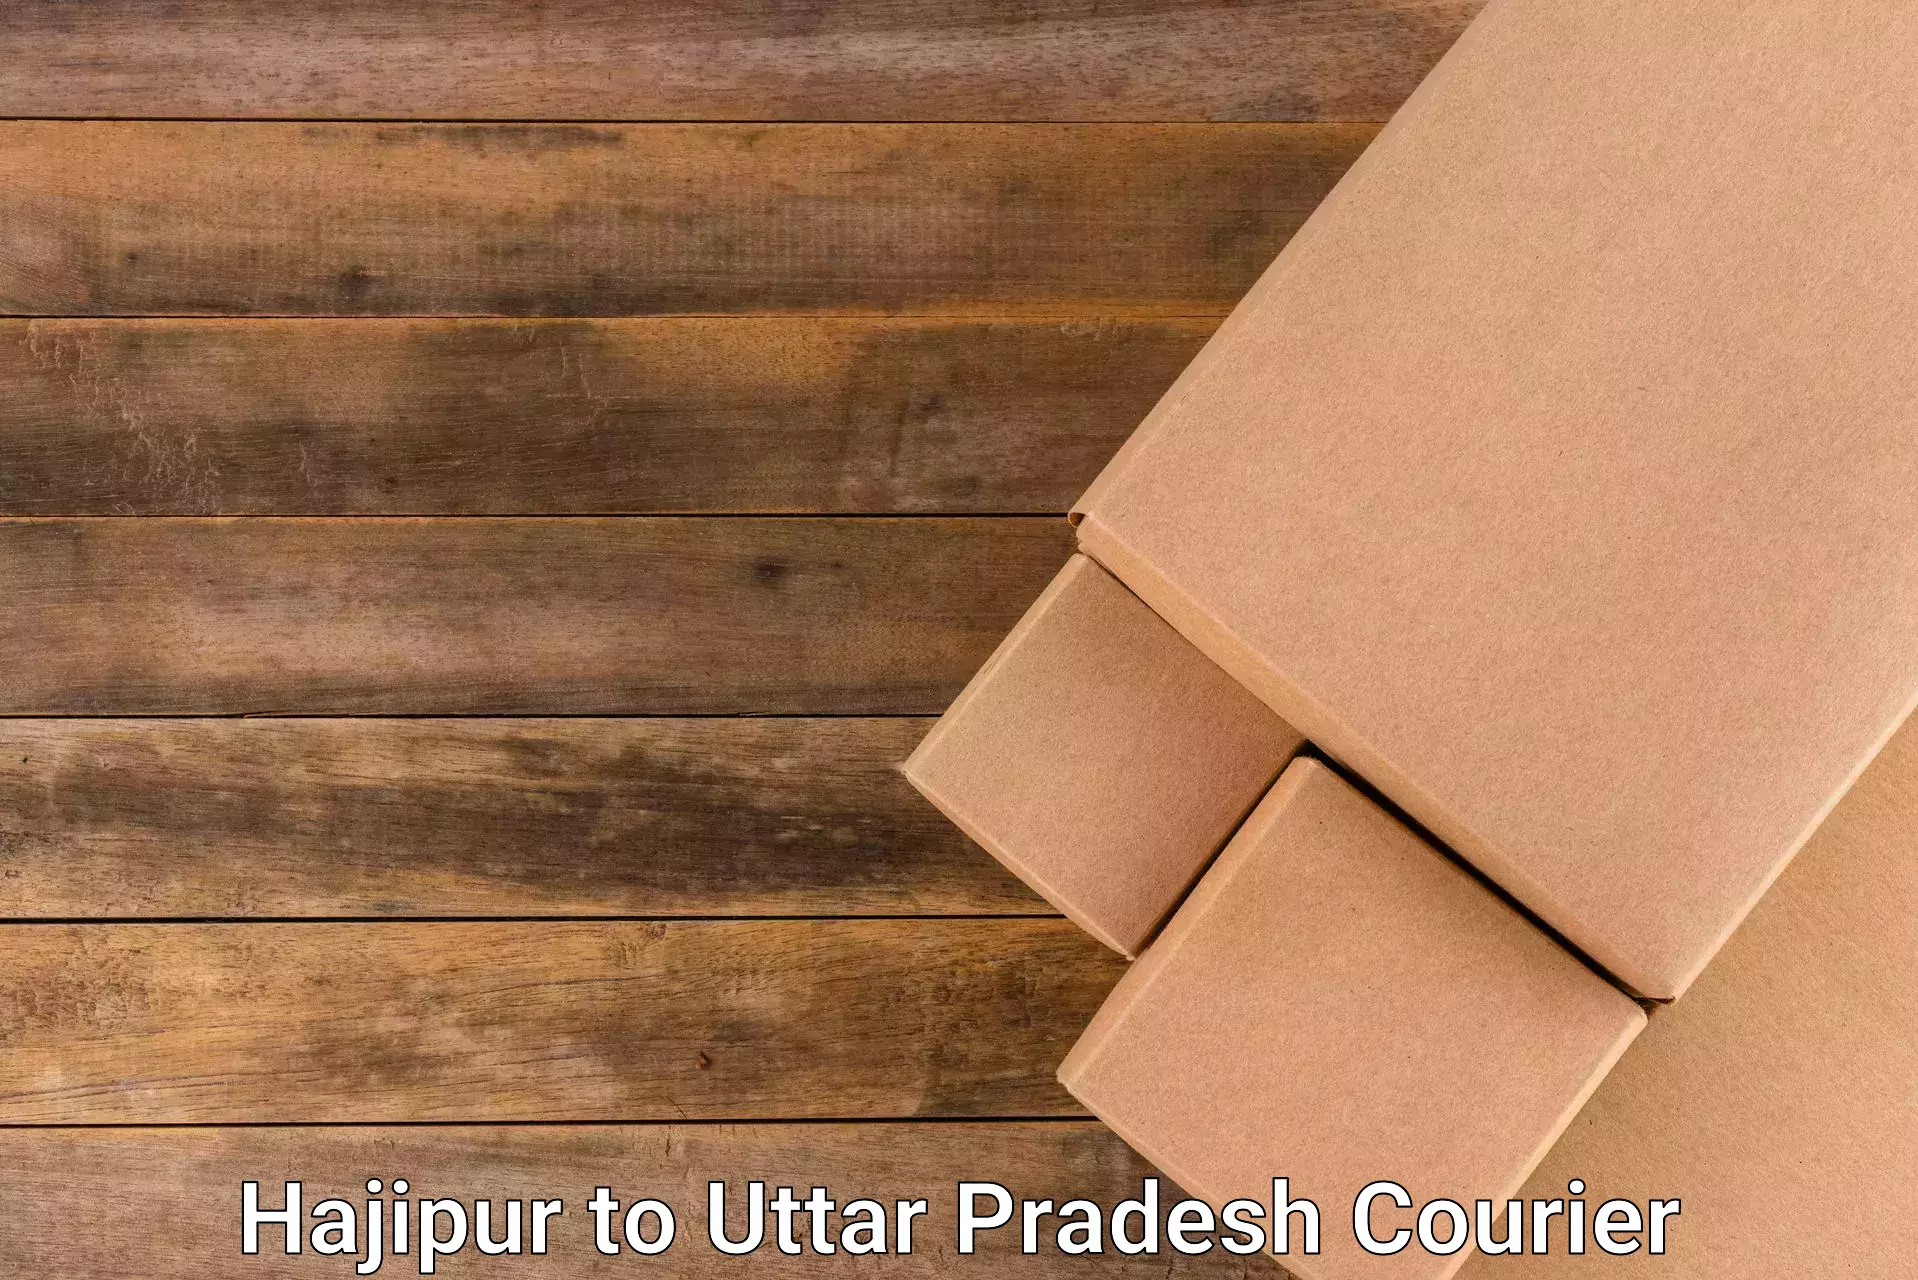 Package delivery network Hajipur to Shiv Nadar University Dadri